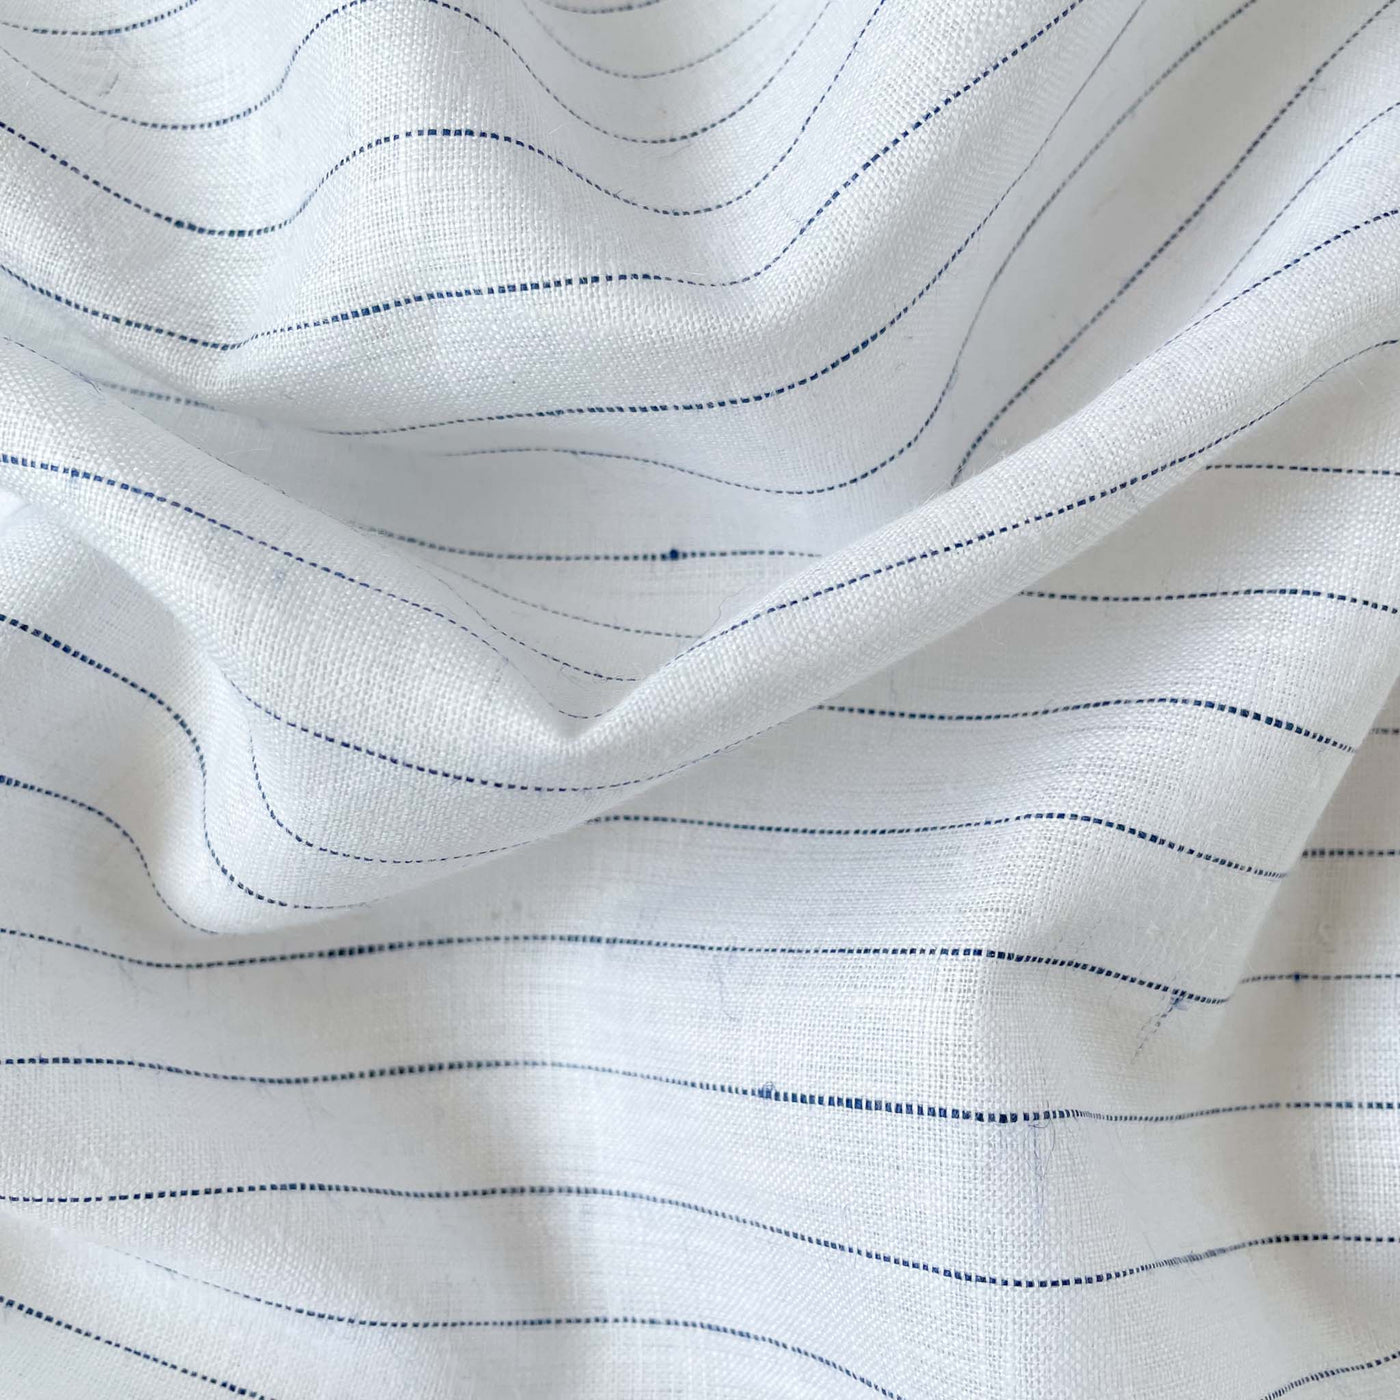 Natural Grey Plain Premium 60 Lea Pure Linen Fabric (Width 58 Inches) –  Fabric Pandit